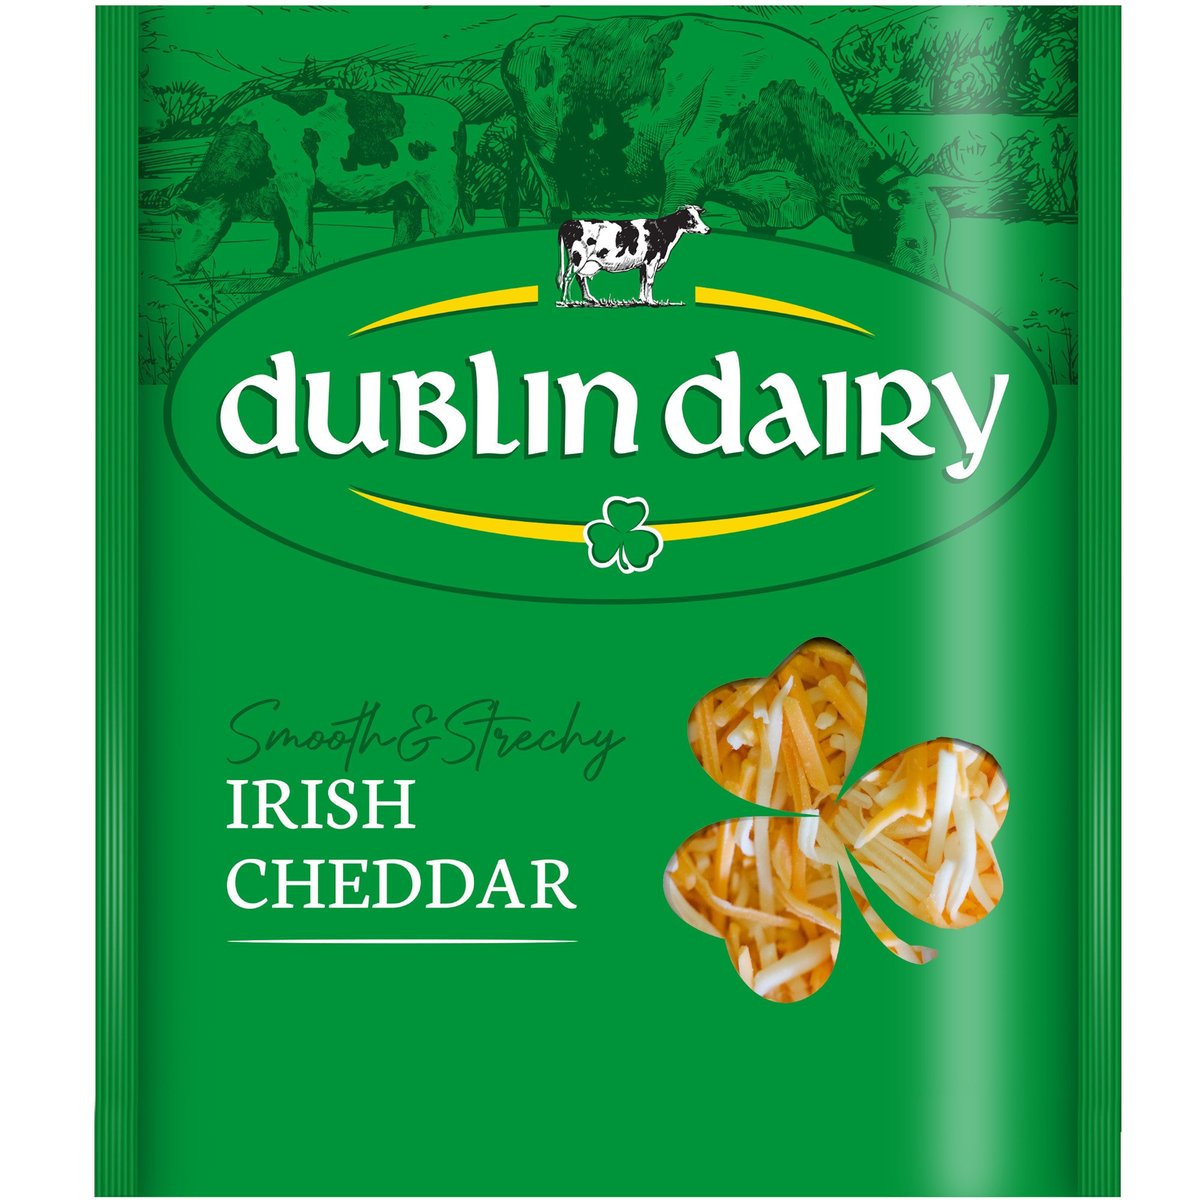 Dublin Dairy Mix strouhaných sýrů cheddar white & red